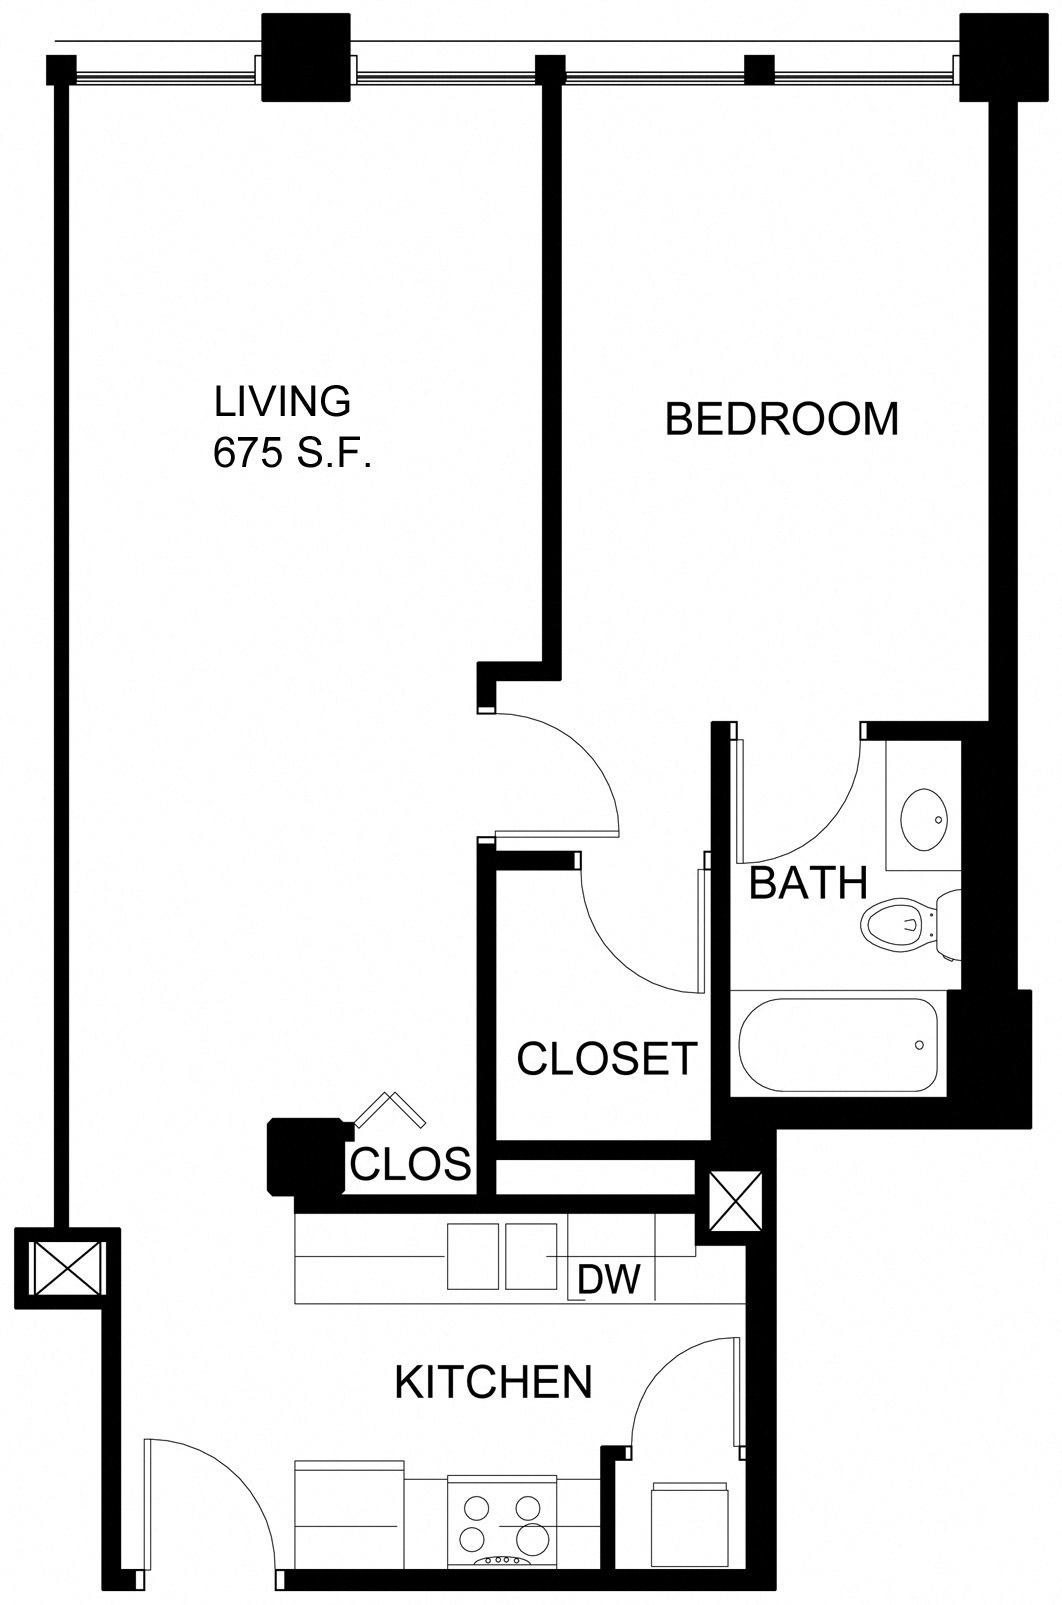 Floorplan for Apartment #P629B, 1 bedroom unit at Halstead Providence